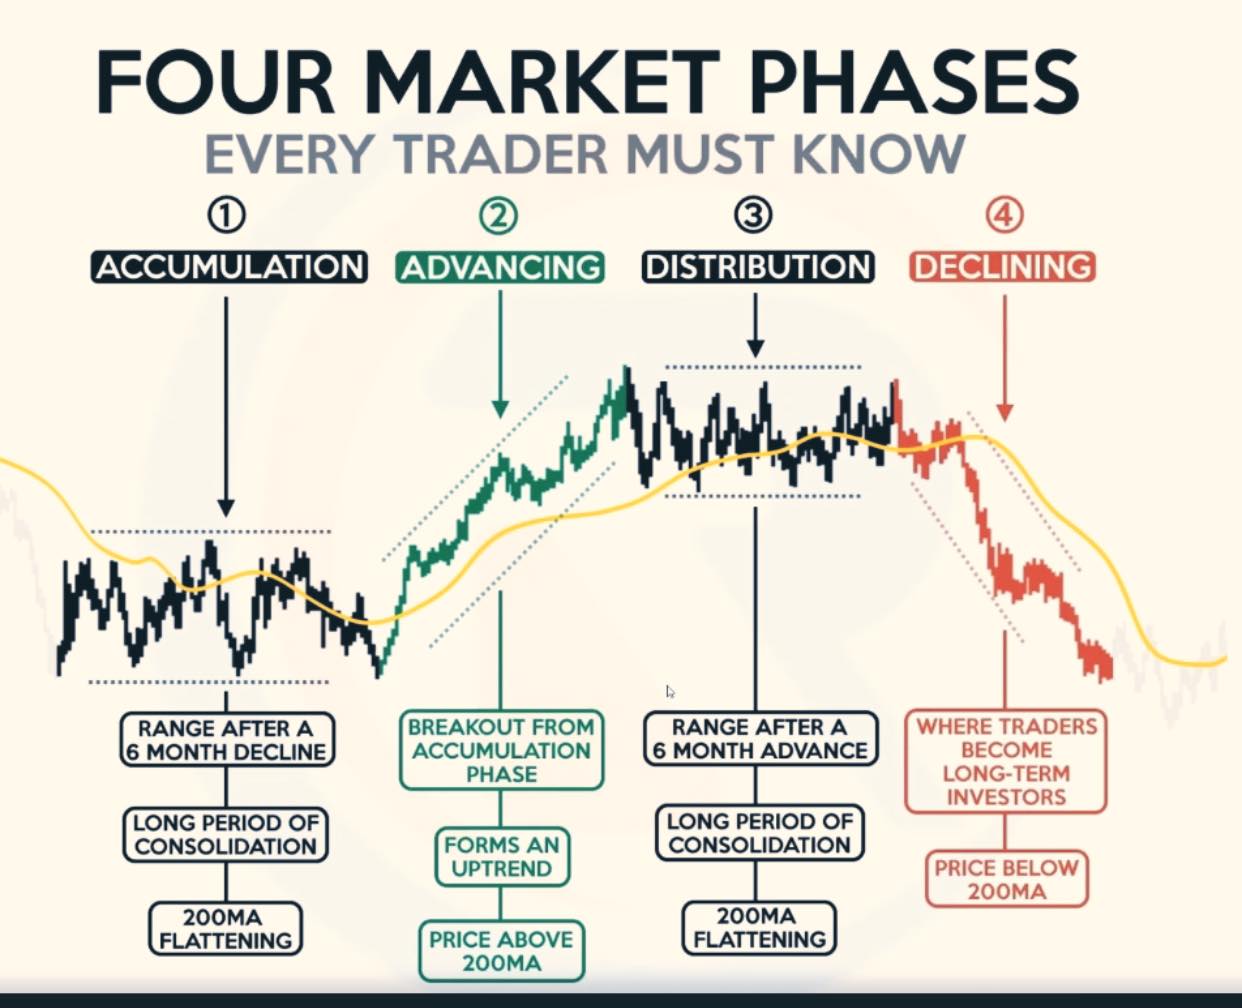 image showing market phases